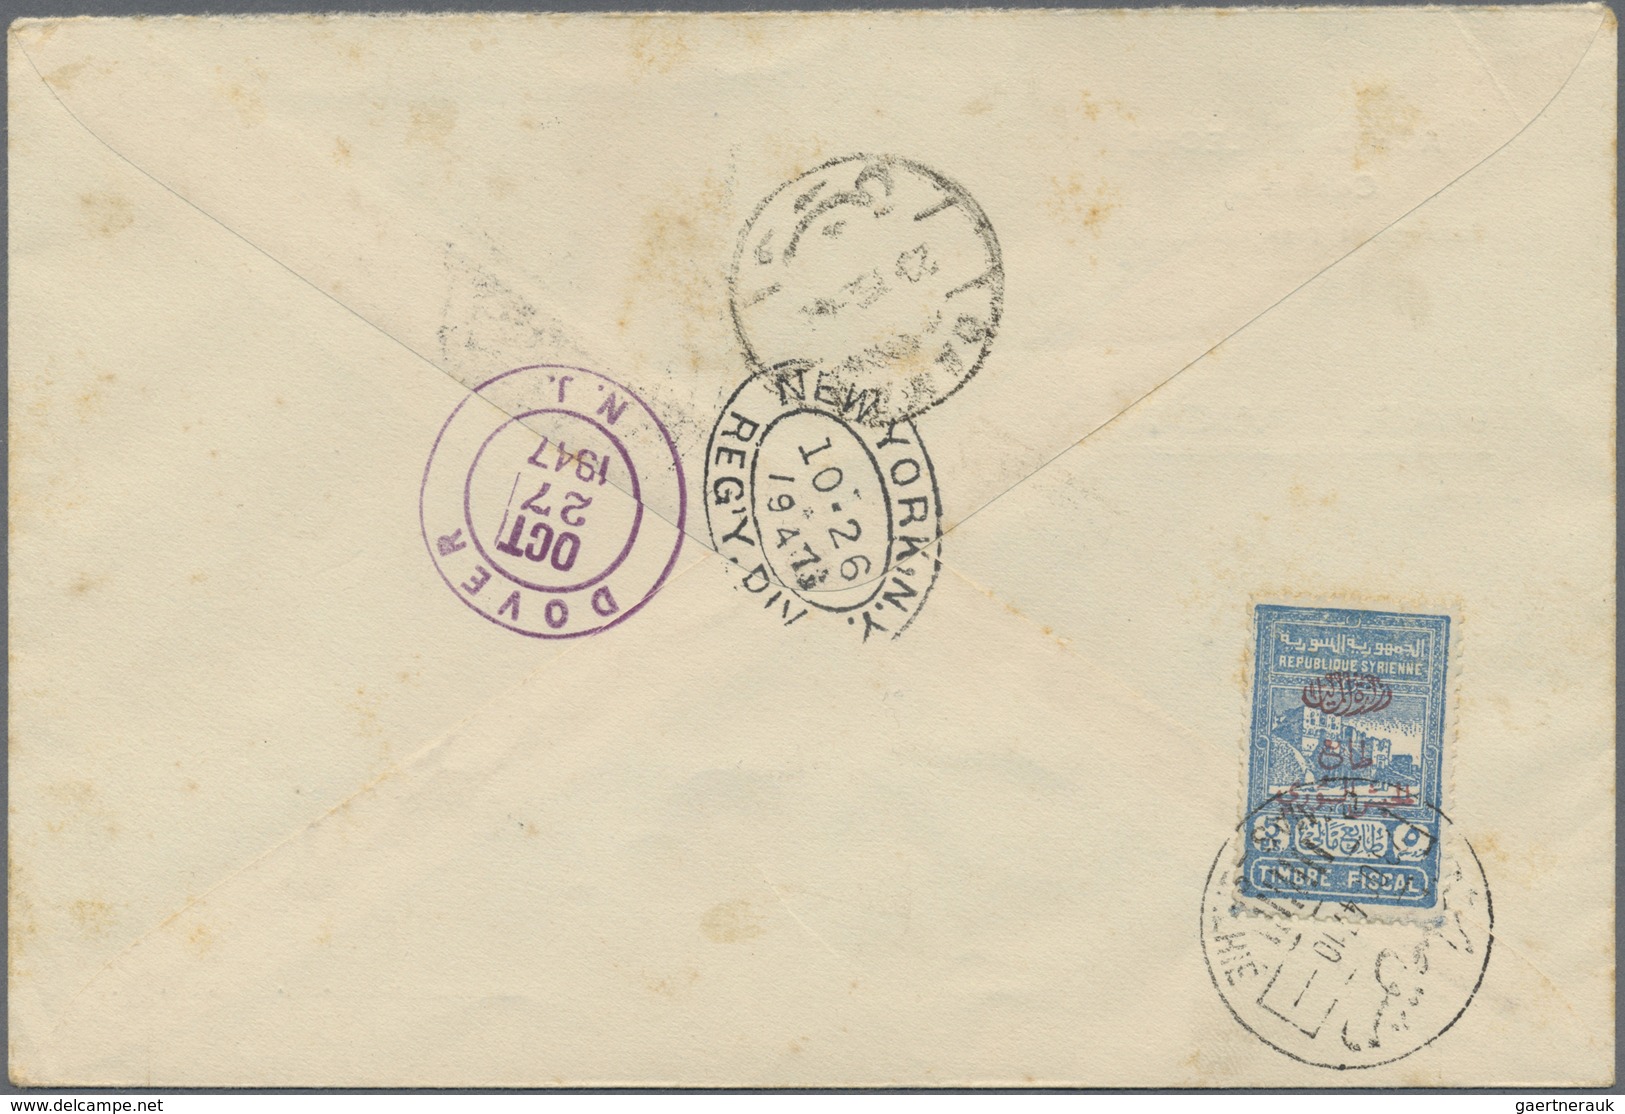 Br Syrien: 1945, President Shukri al-Quwatli, 5pi. to 200pi., all seven airmail mini sheets, each on re